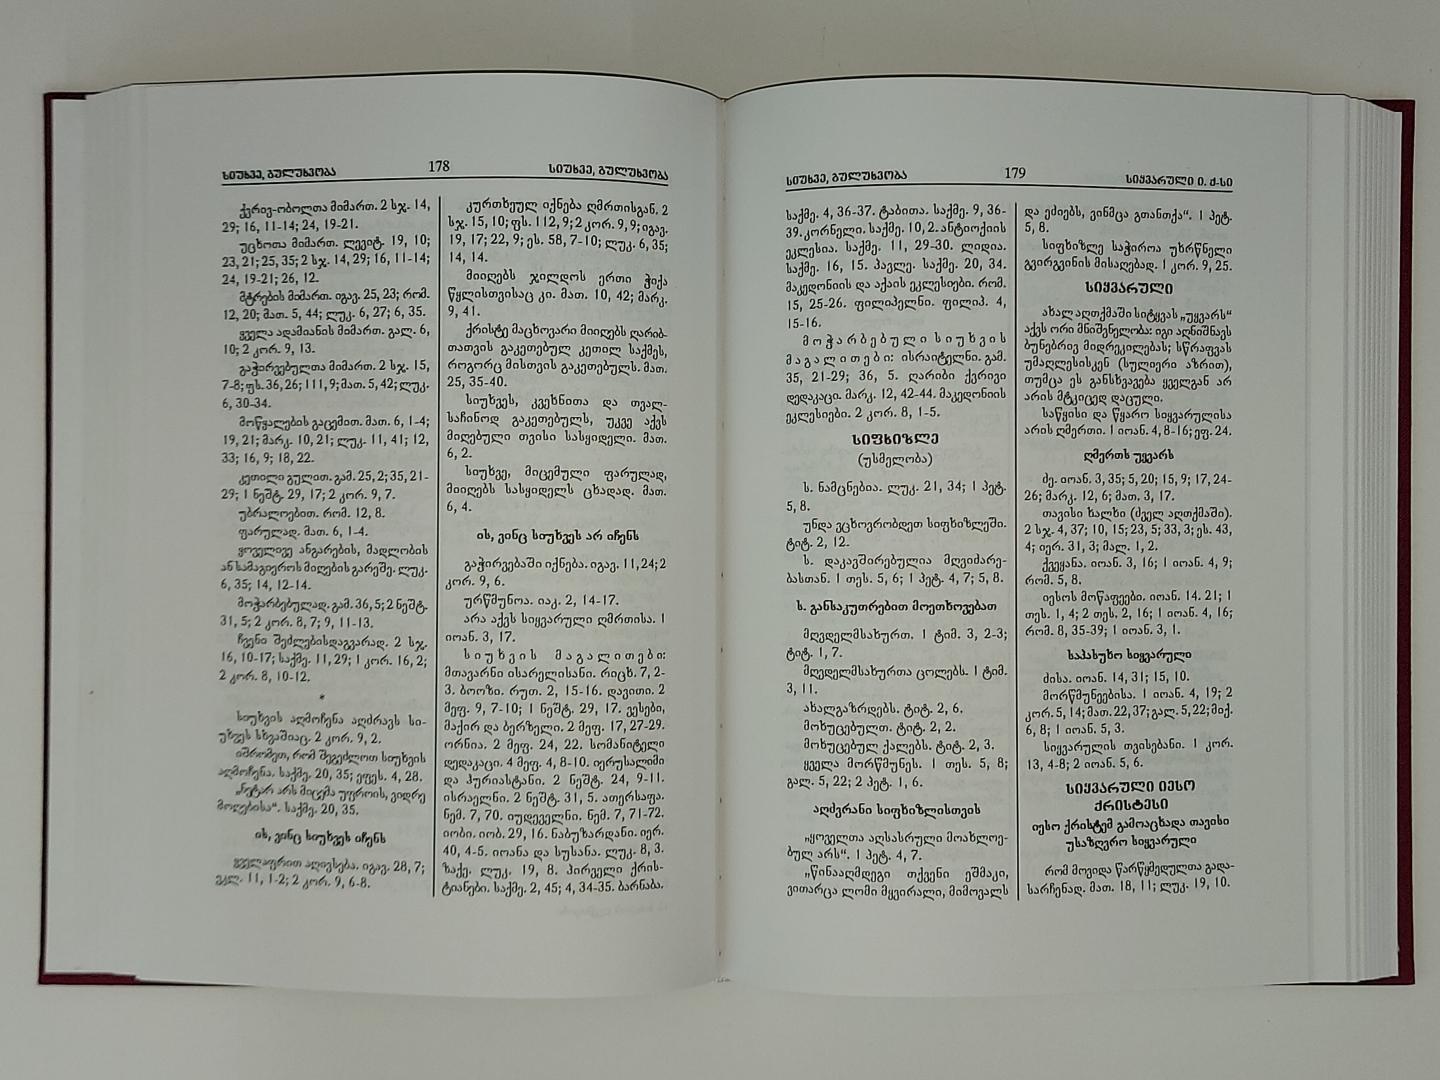 Giunashvili, Elgudja / Kalandadze, Zurab - Dictionary of Bible Terms (Limited edition in Georgian). SET 2 DELEN